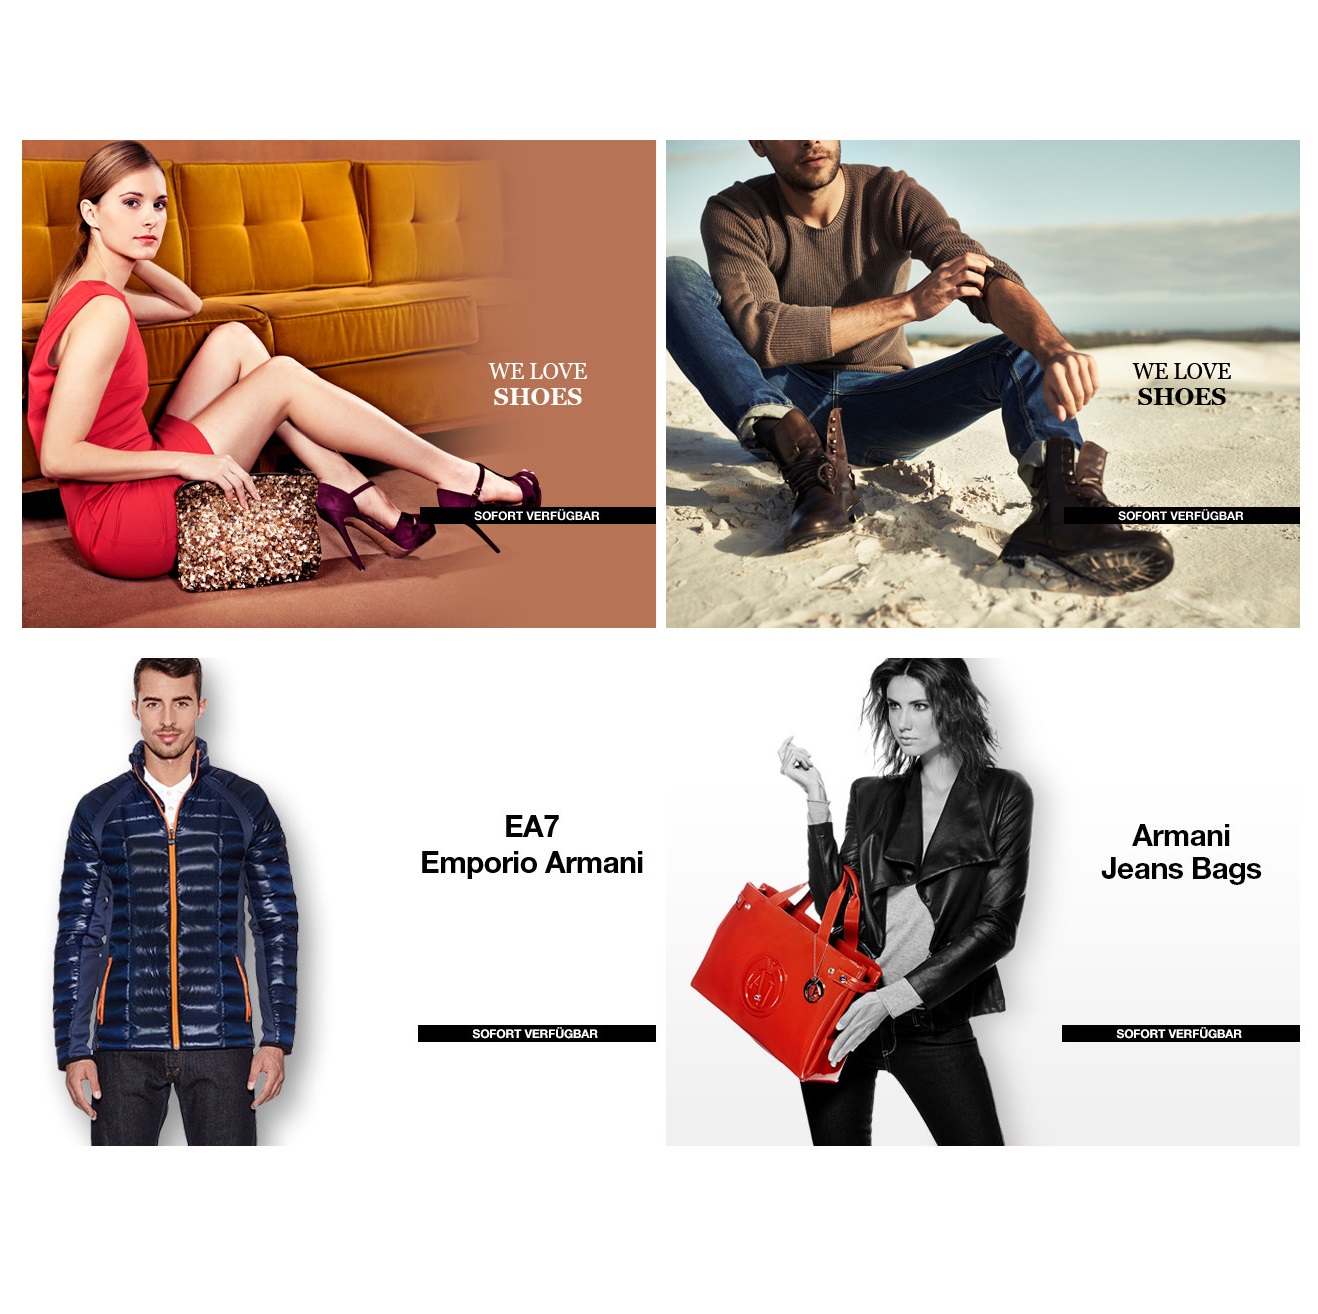 Armani Jeans Bags/EA7 Emporio Armani/Damenschuhe unter 20 Euro/Jack & Jones & Tom Tailor/We Love shoes